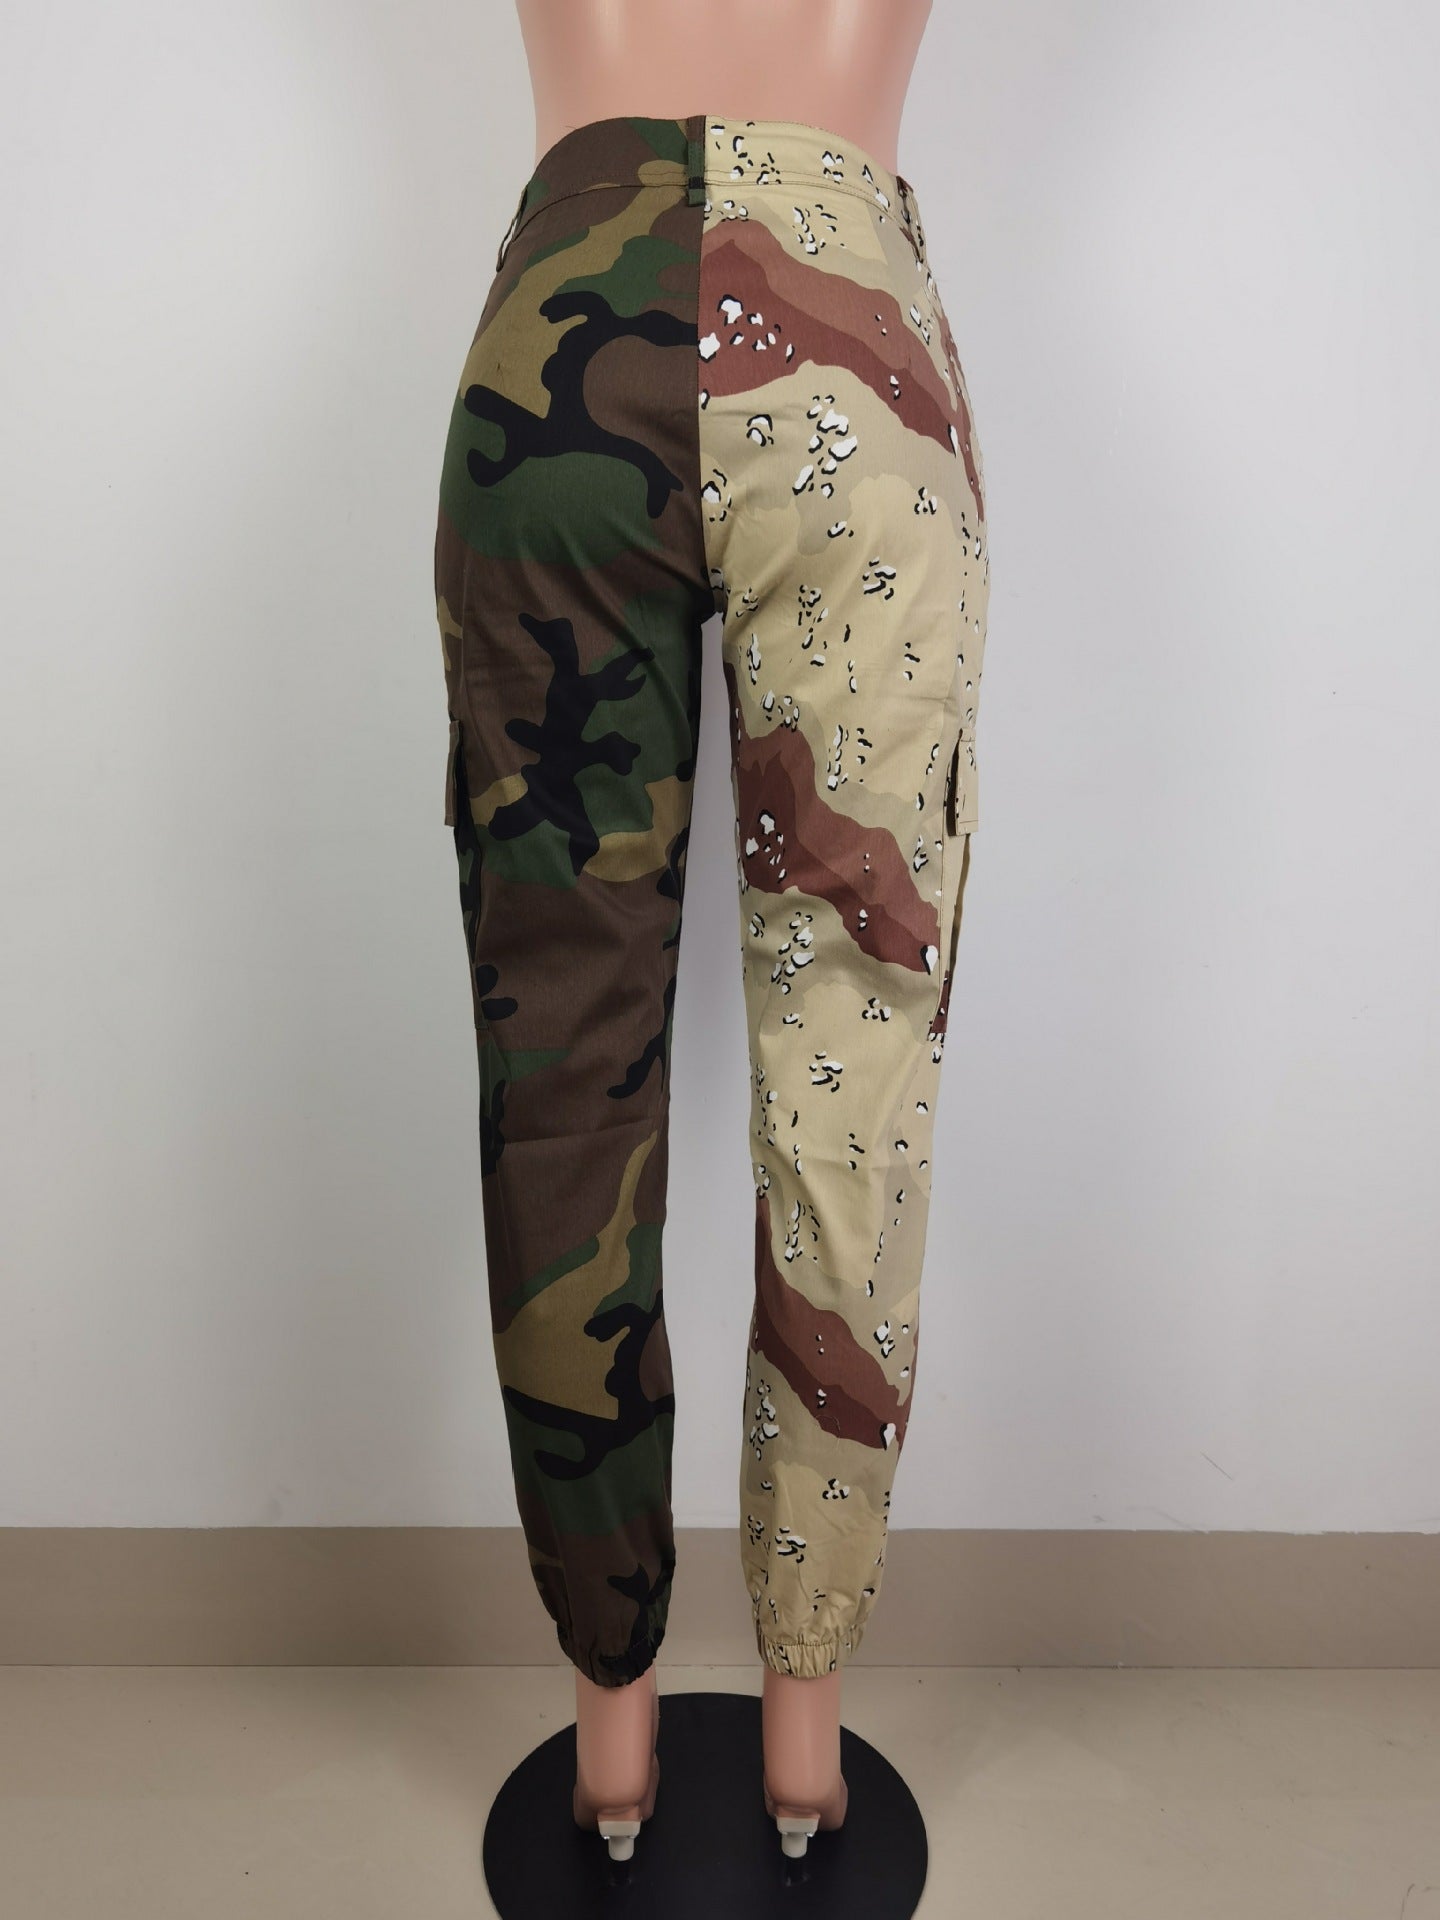 Fashion Popular Camouflage Women Pants